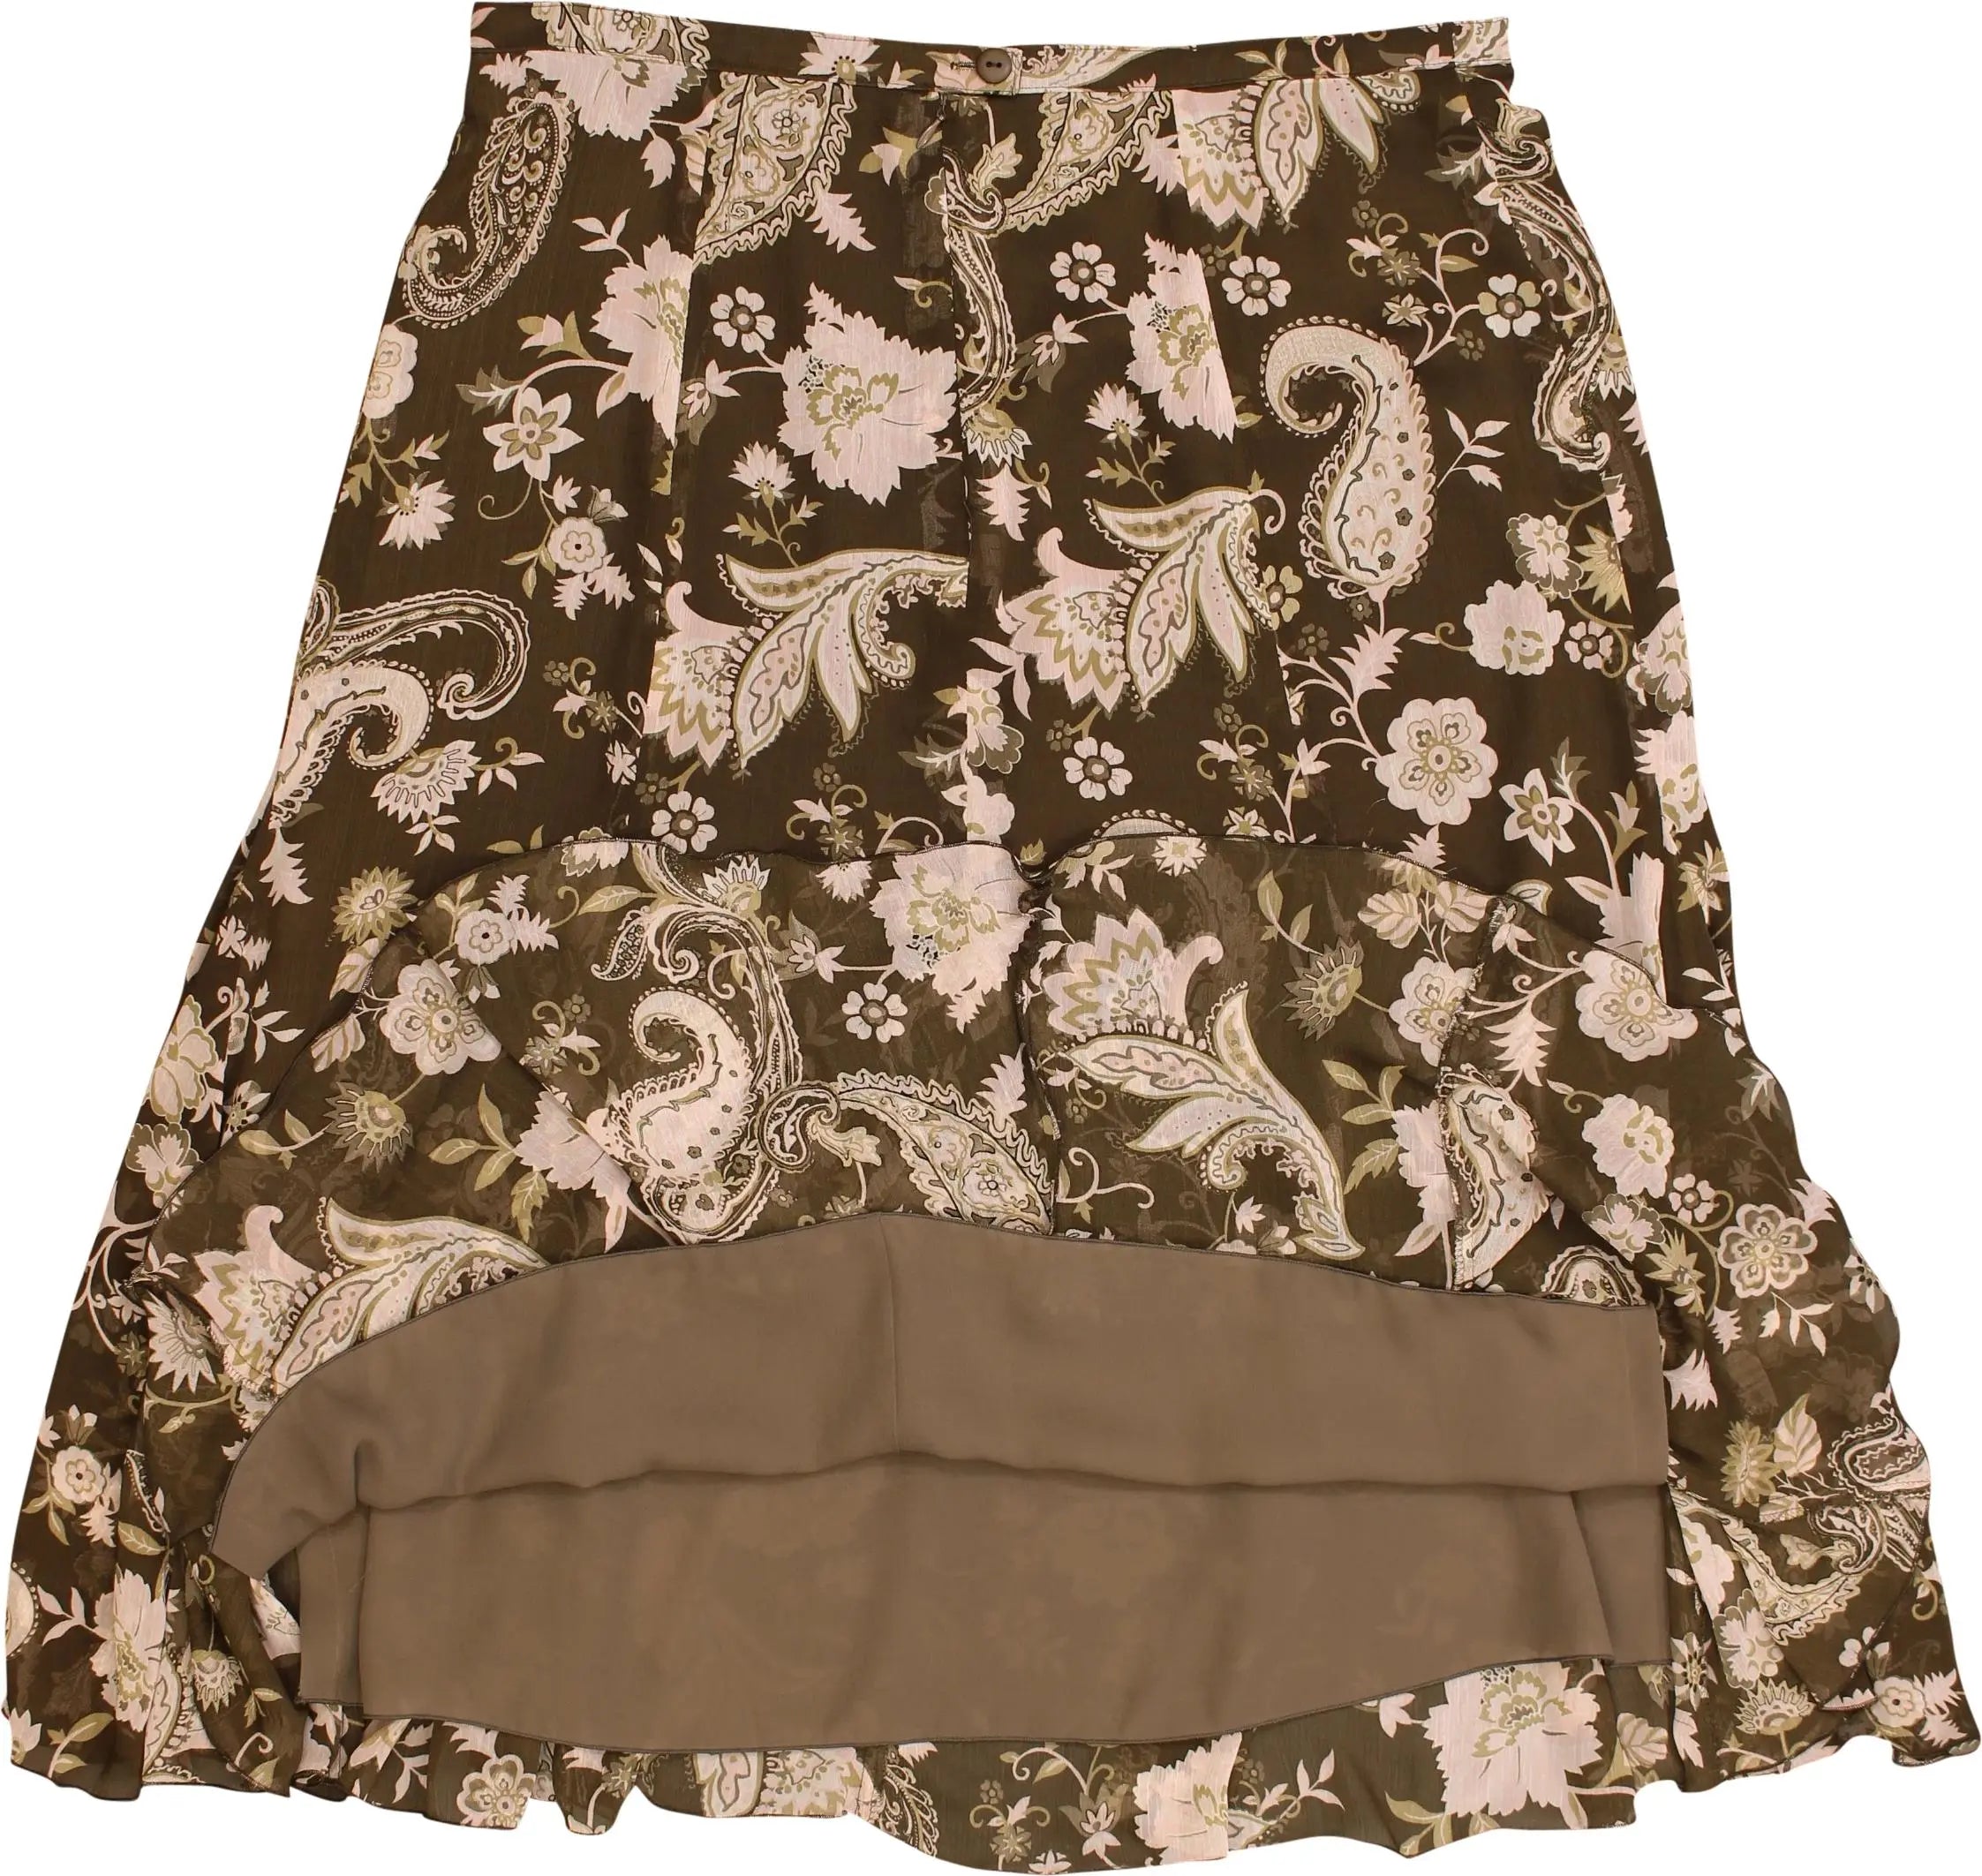 BASLER - Floral Paisley Skirt- ThriftTale.com - Vintage and second handclothing